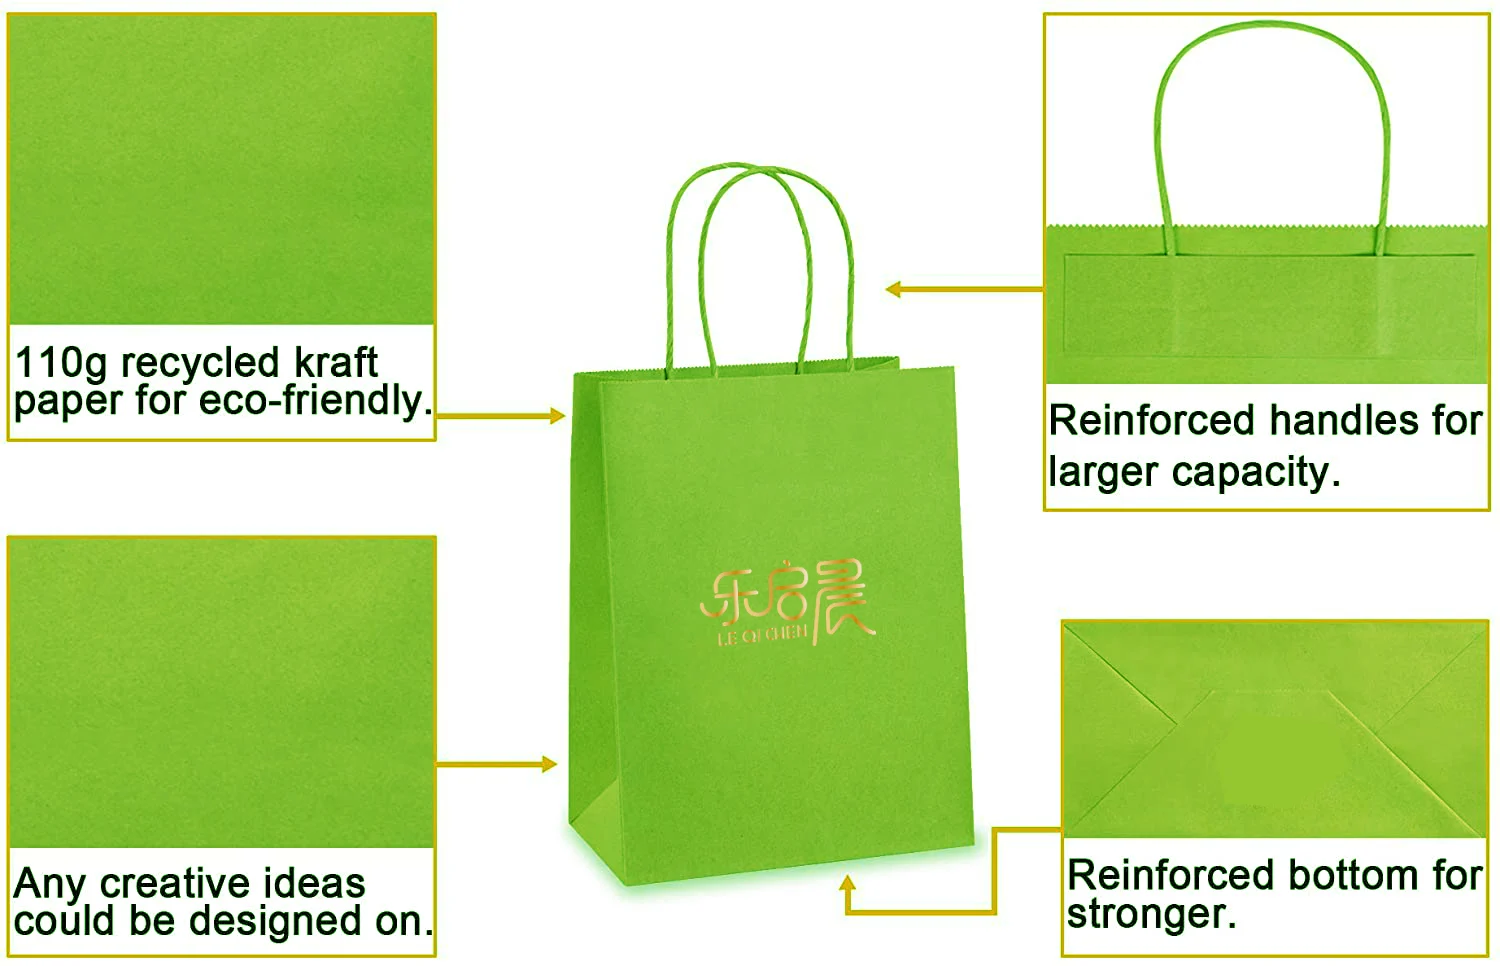 Paper Bag Gift, Jewelry Packaging Gift Paper Shopping Bag,custom logo